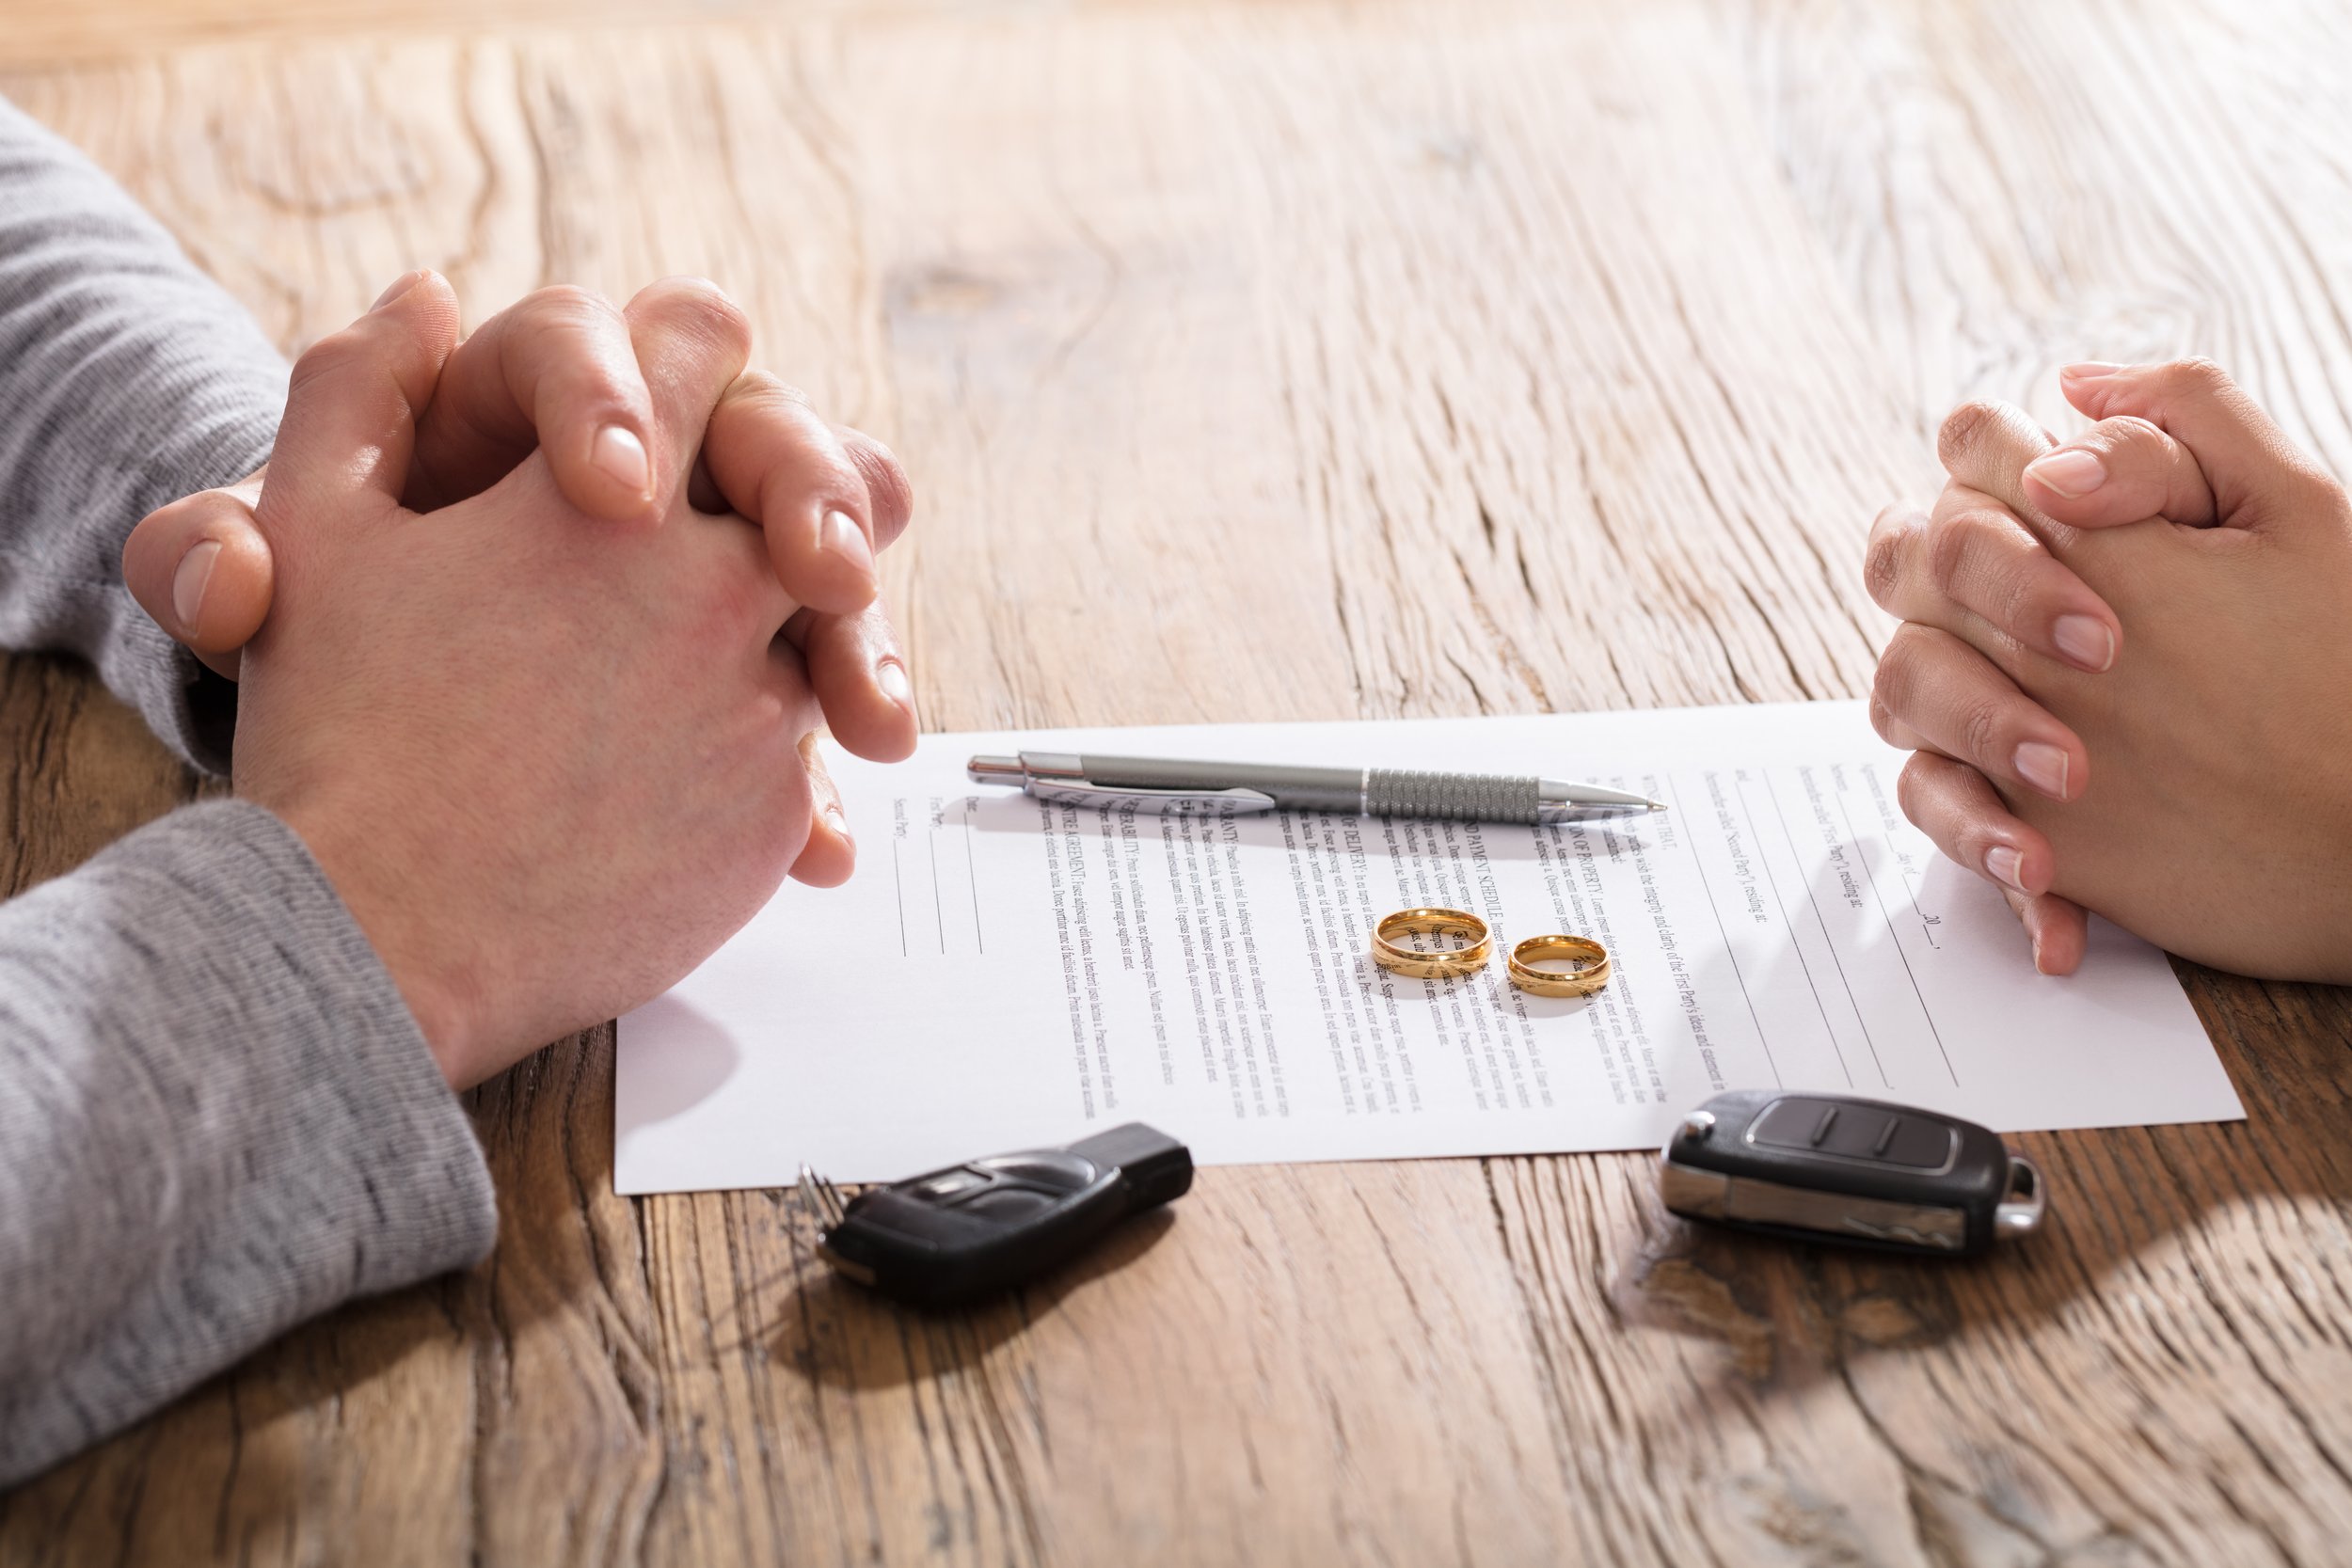 Couple's Hand On Divorce Agreement Wit Car Keys